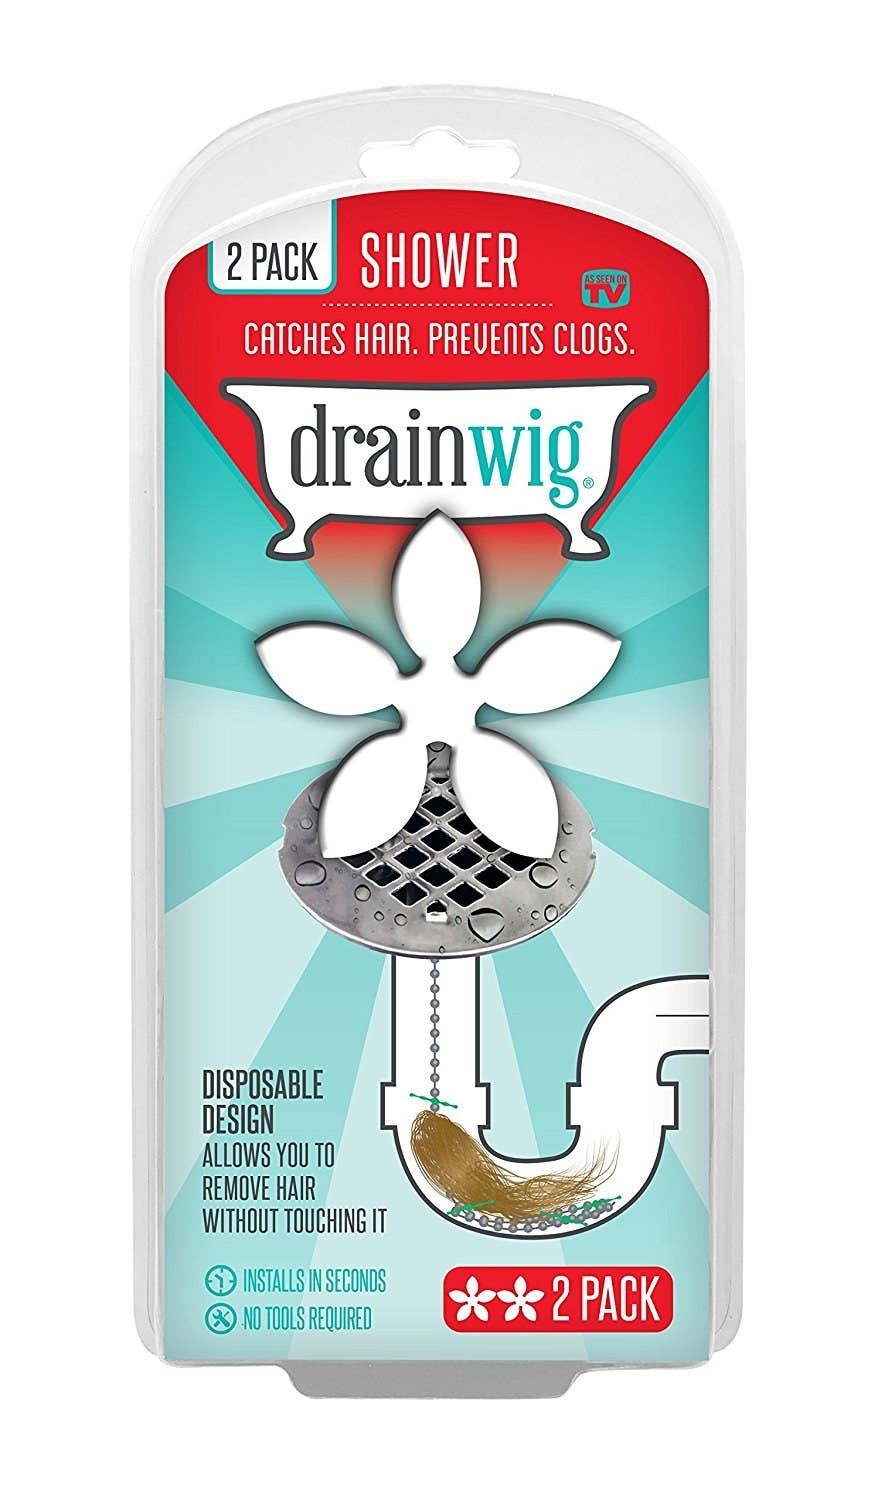 Drainwig (Drain Wig) Review - The sexy drain hair catcher